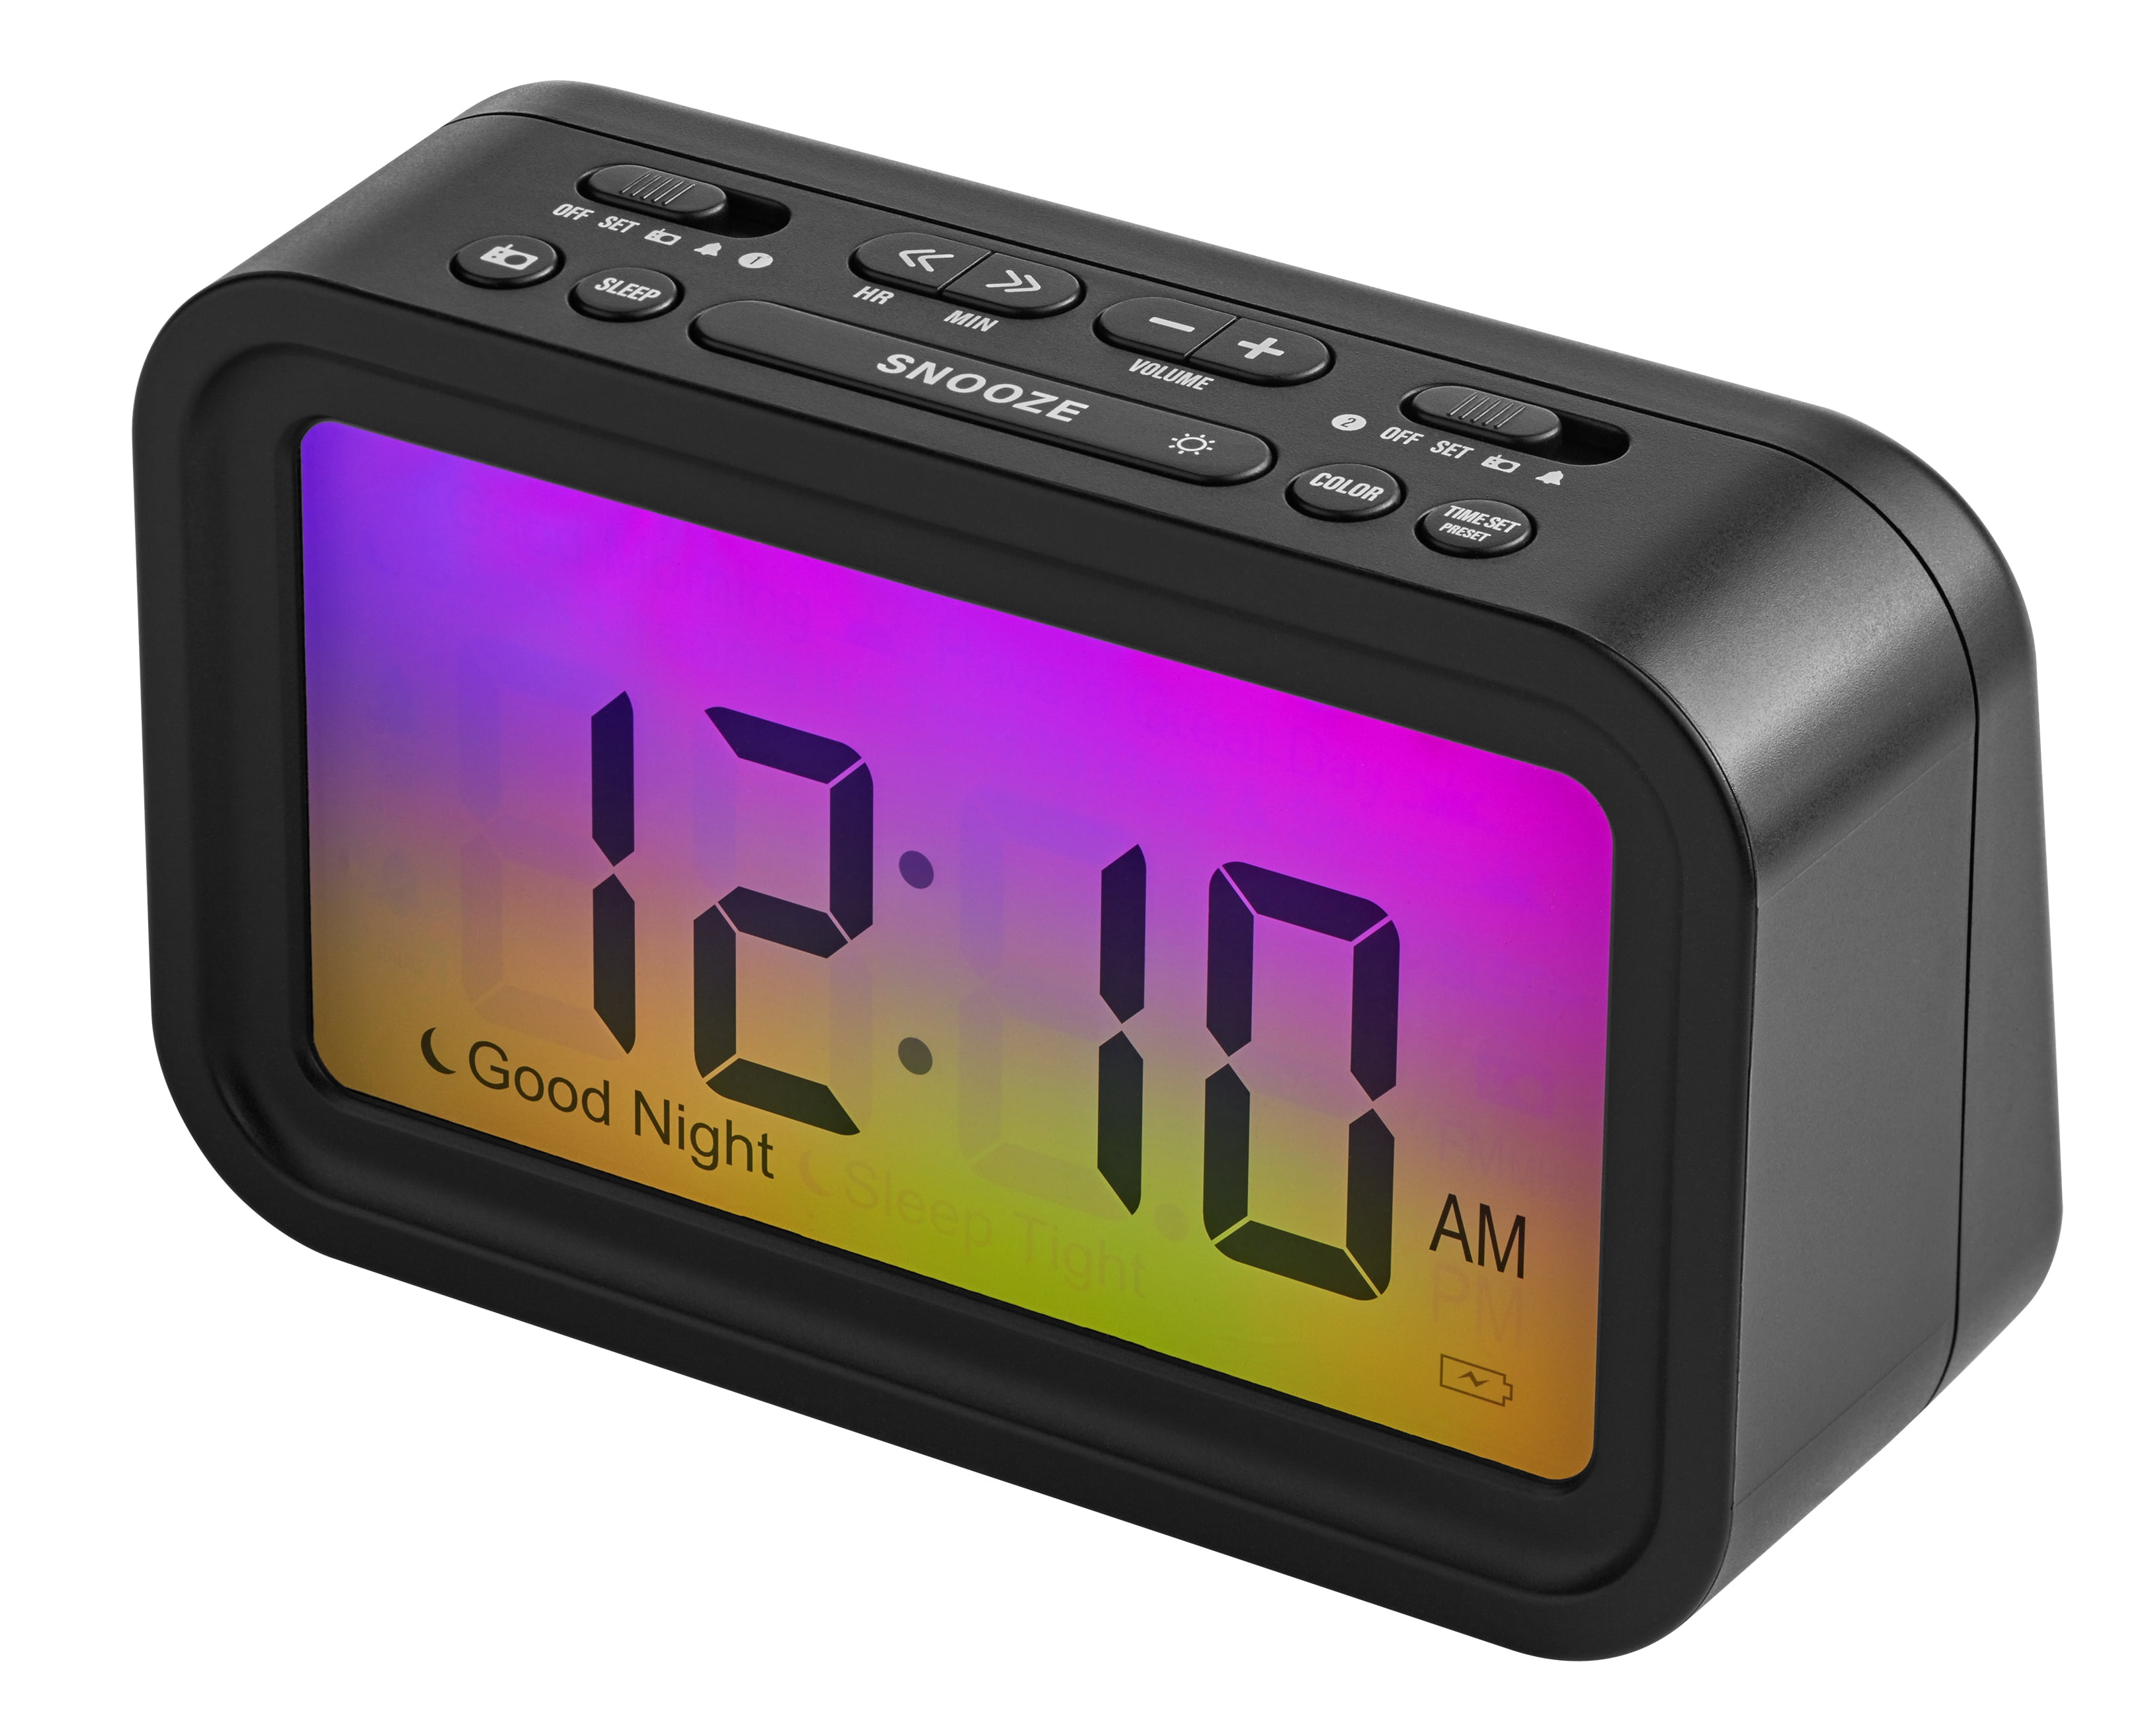 onn. Digital Alarm Clock Ombre Changing Display Walmart.com